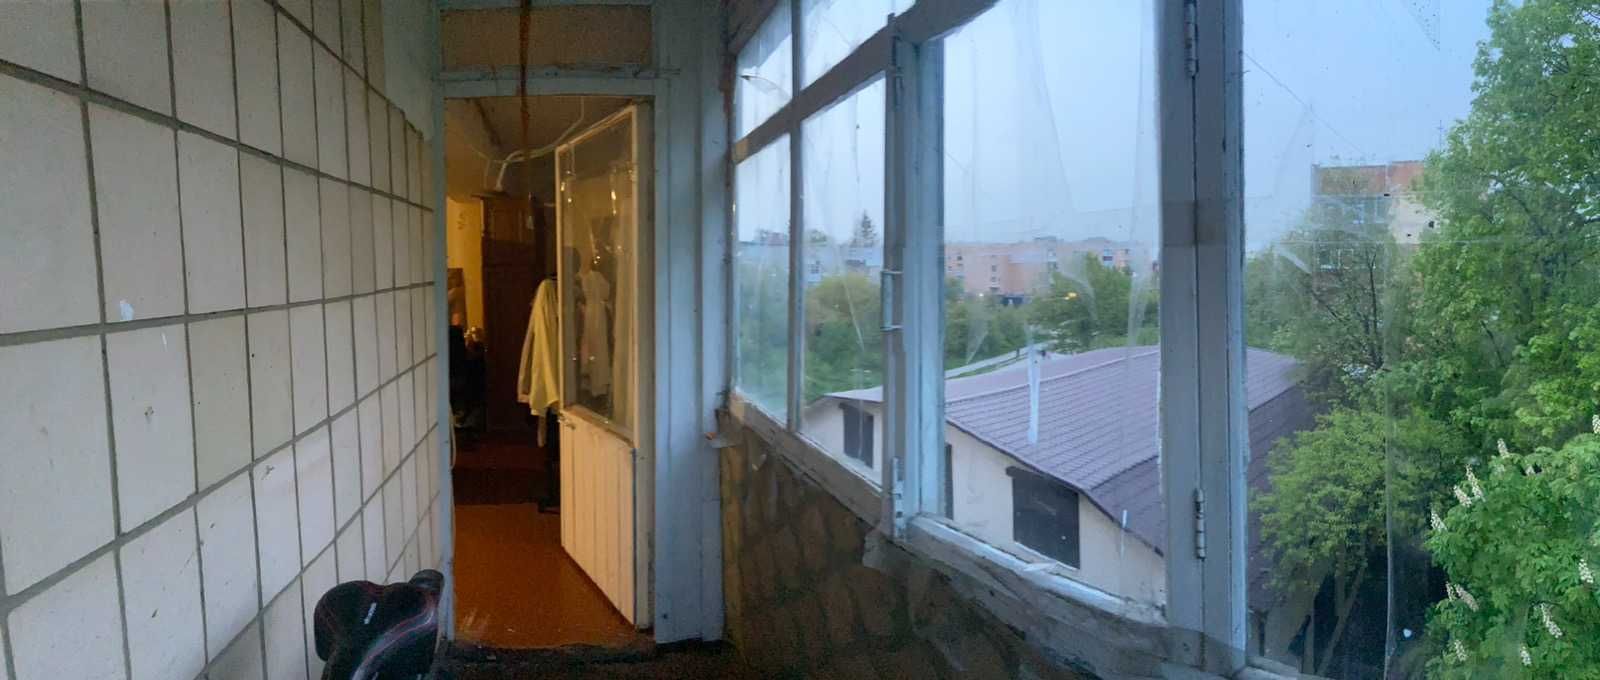 Реальна 1к квартира чешка в цегляному будинку на Браилках.